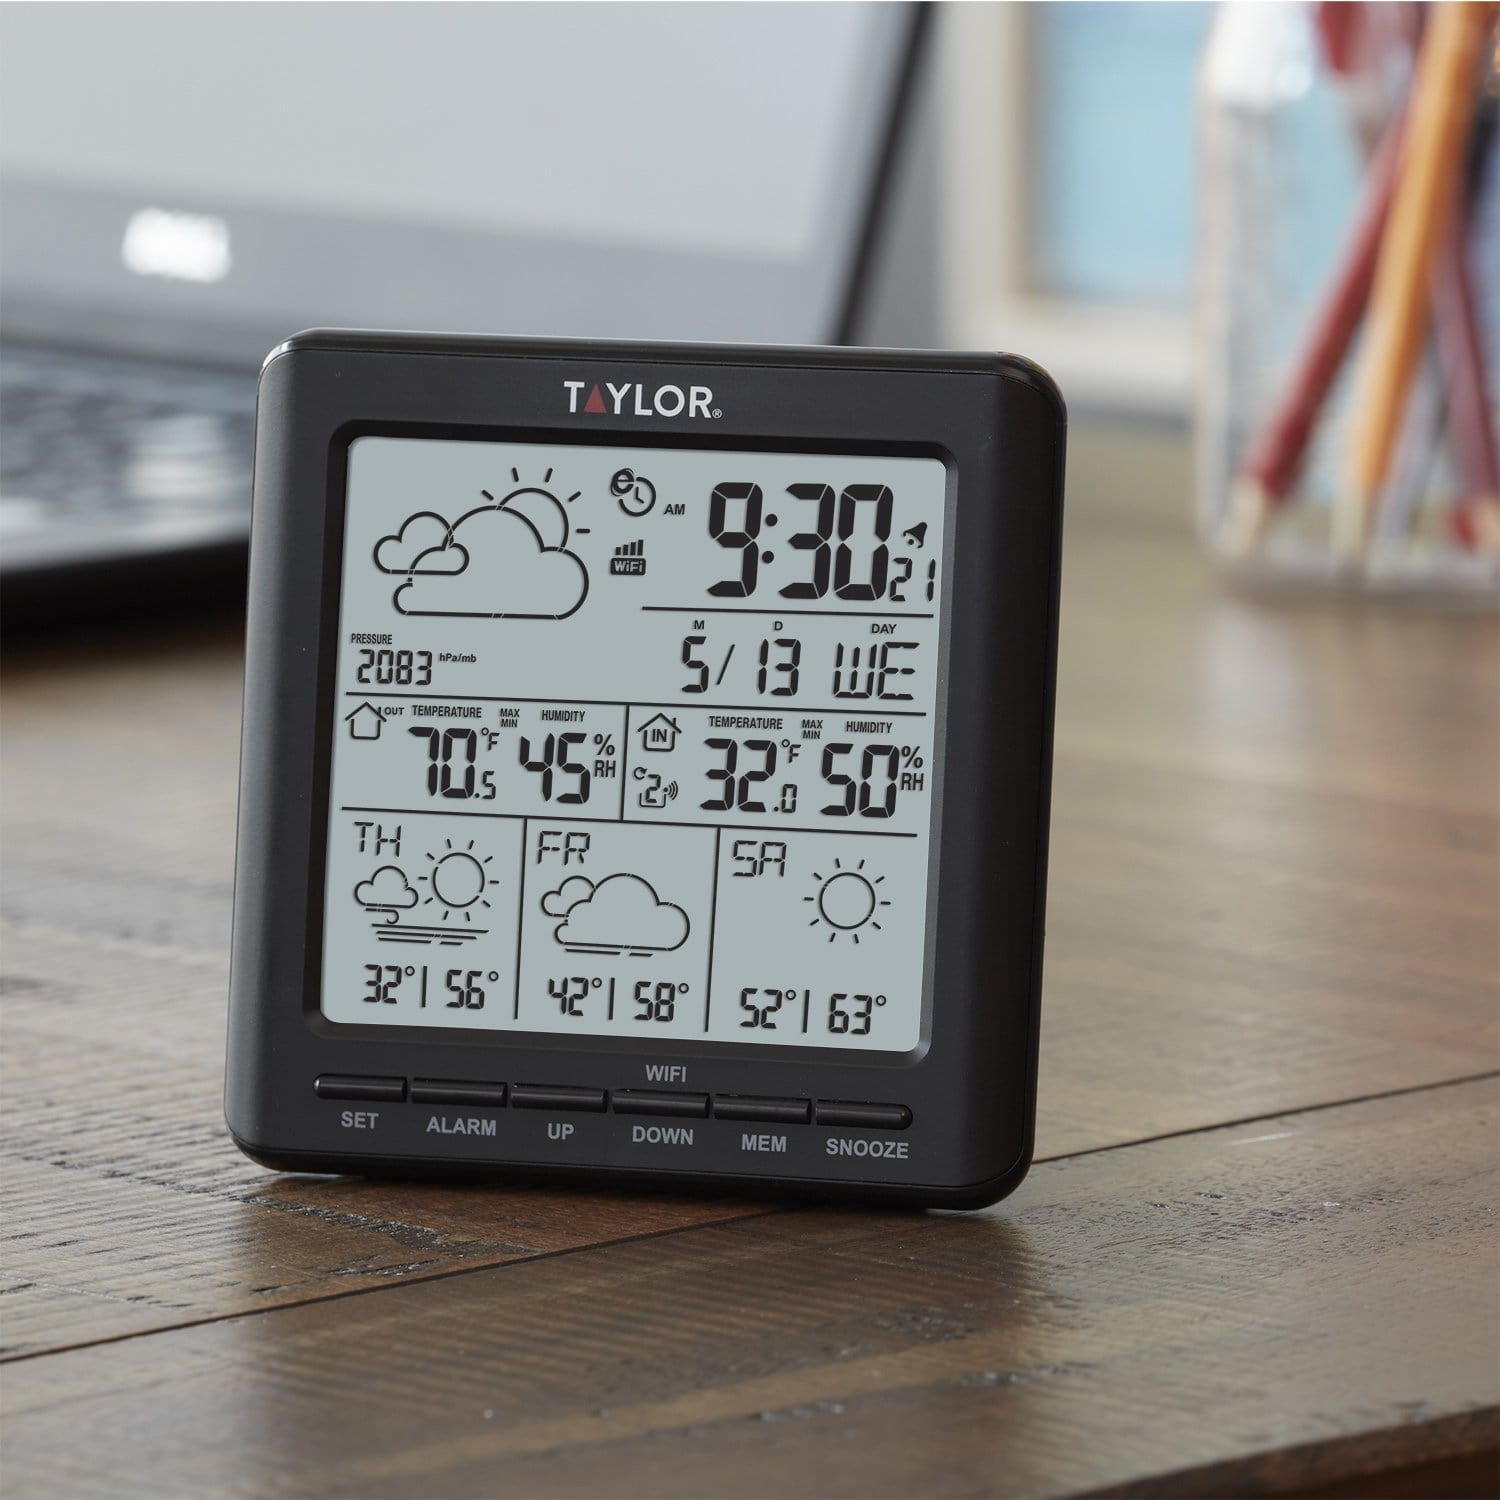 Digital Thermometer Hygrometer Indoor Outdoor Temperature Humidity Meter  C/F LCD Display Sensor Probe Weather Station